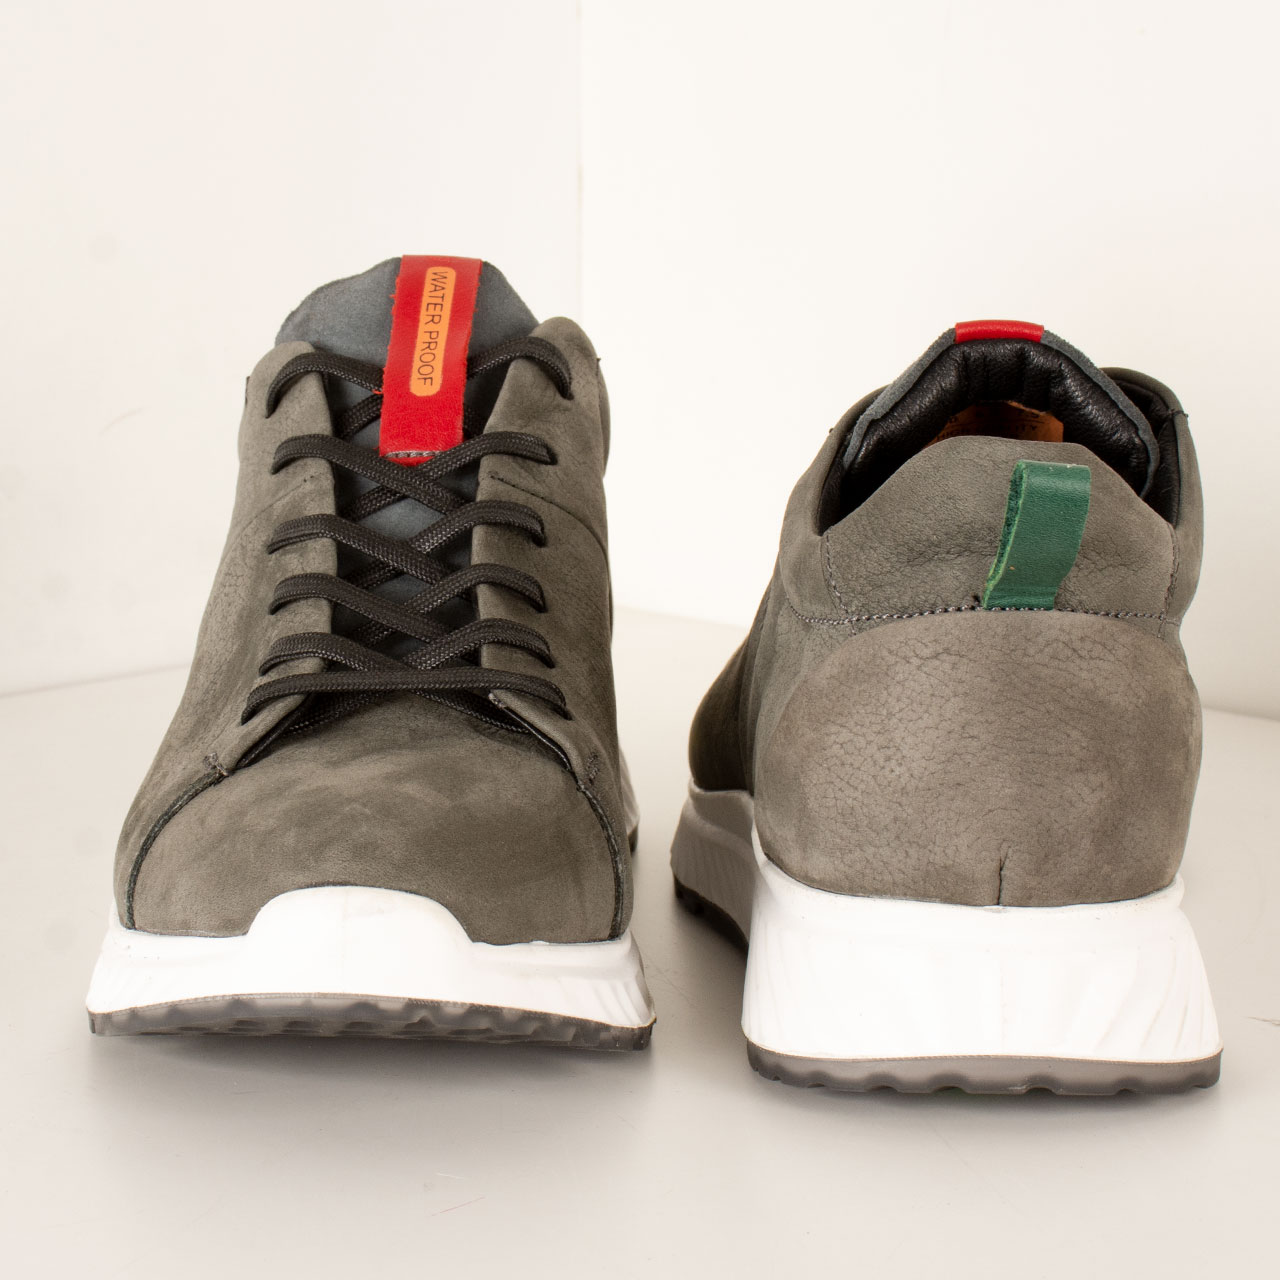 PARINECHARM leather men's casual shoes , SHO217-3 Model